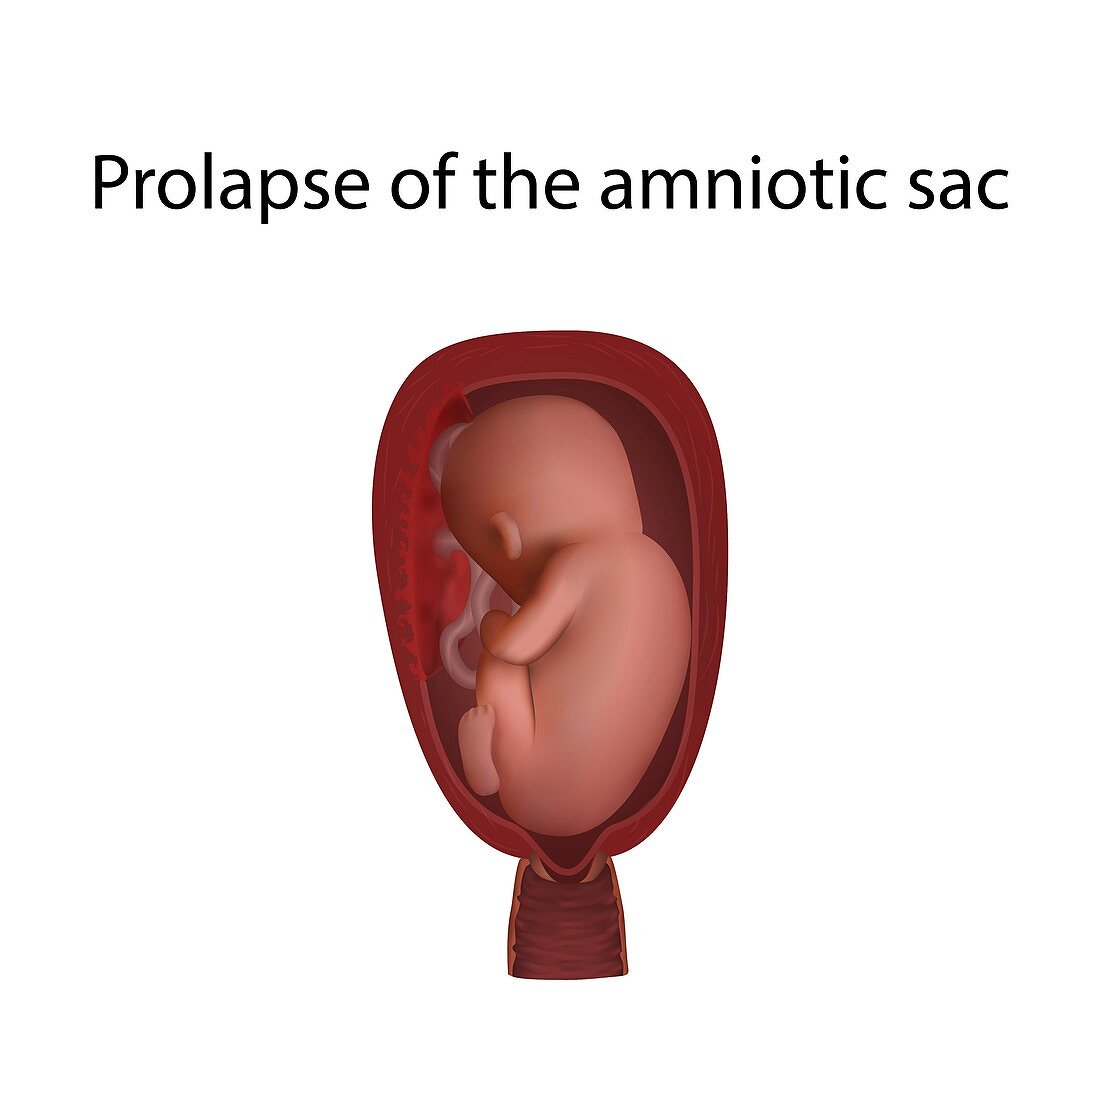 Prolapse of the amniotic sac, illustration